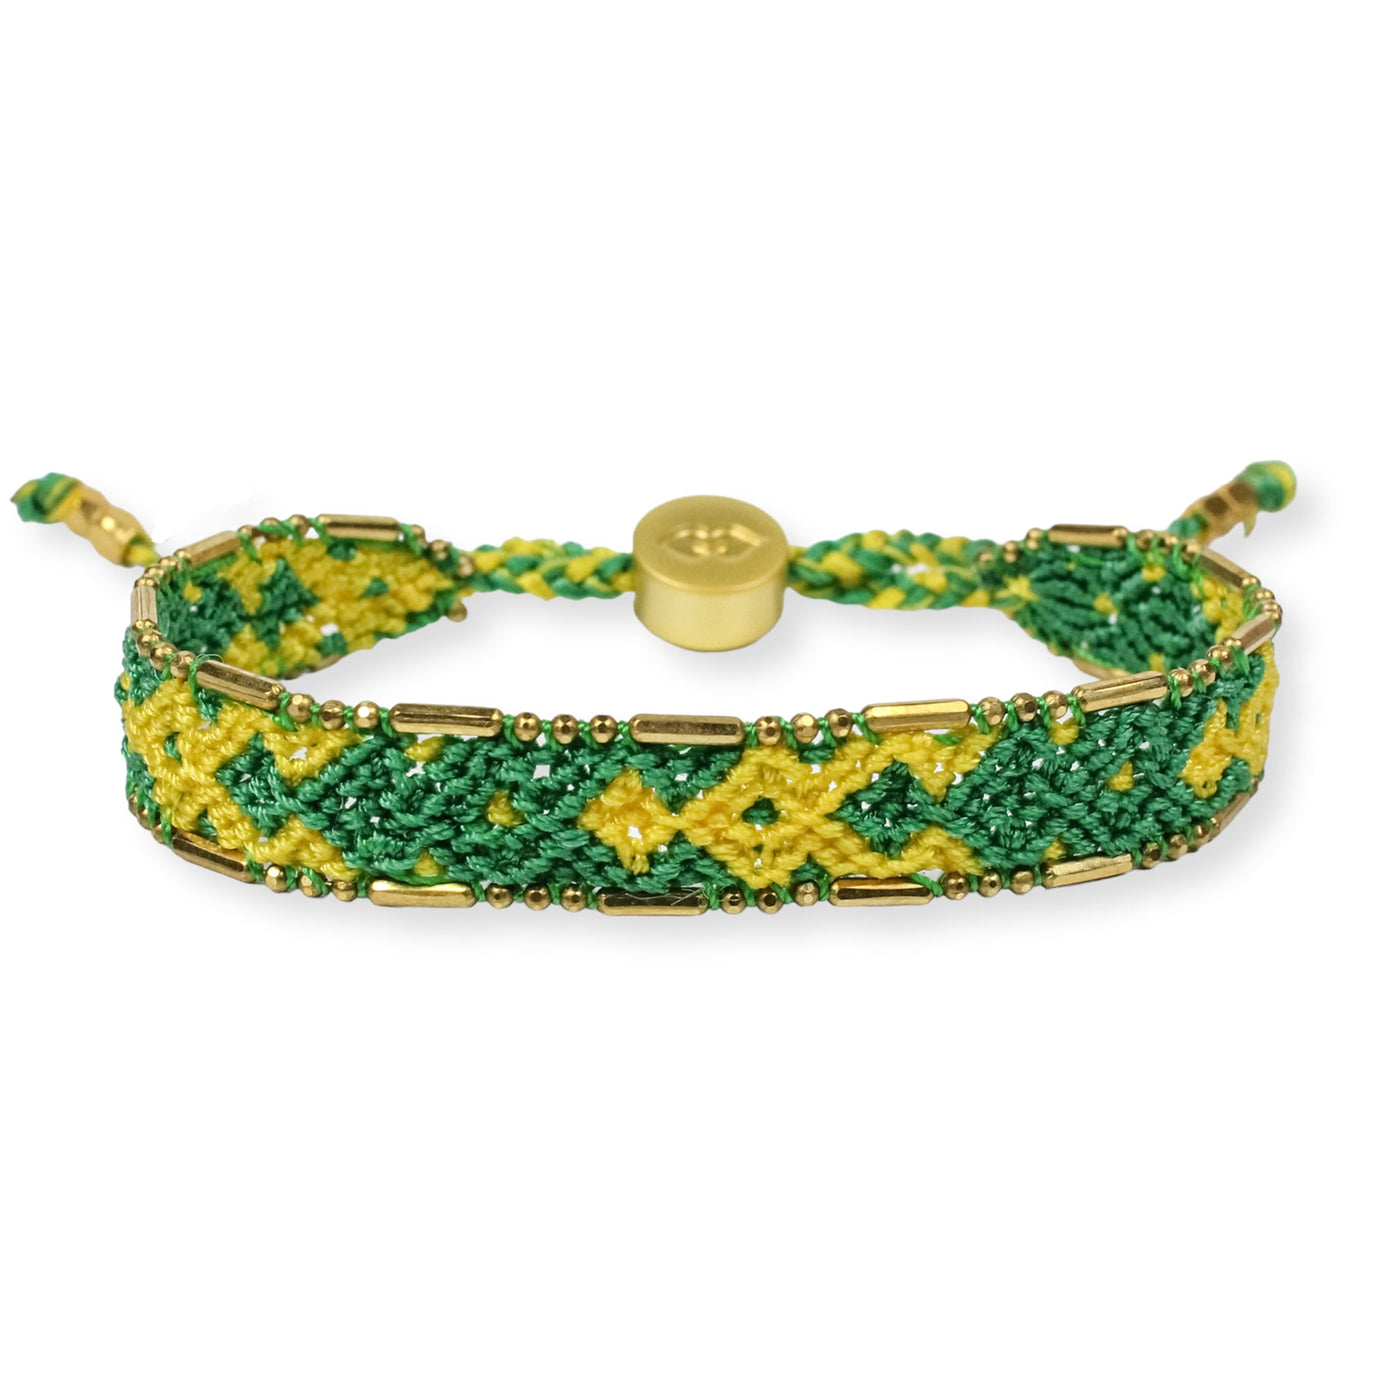 Bali Friendship Bracelet - Green and Yellow